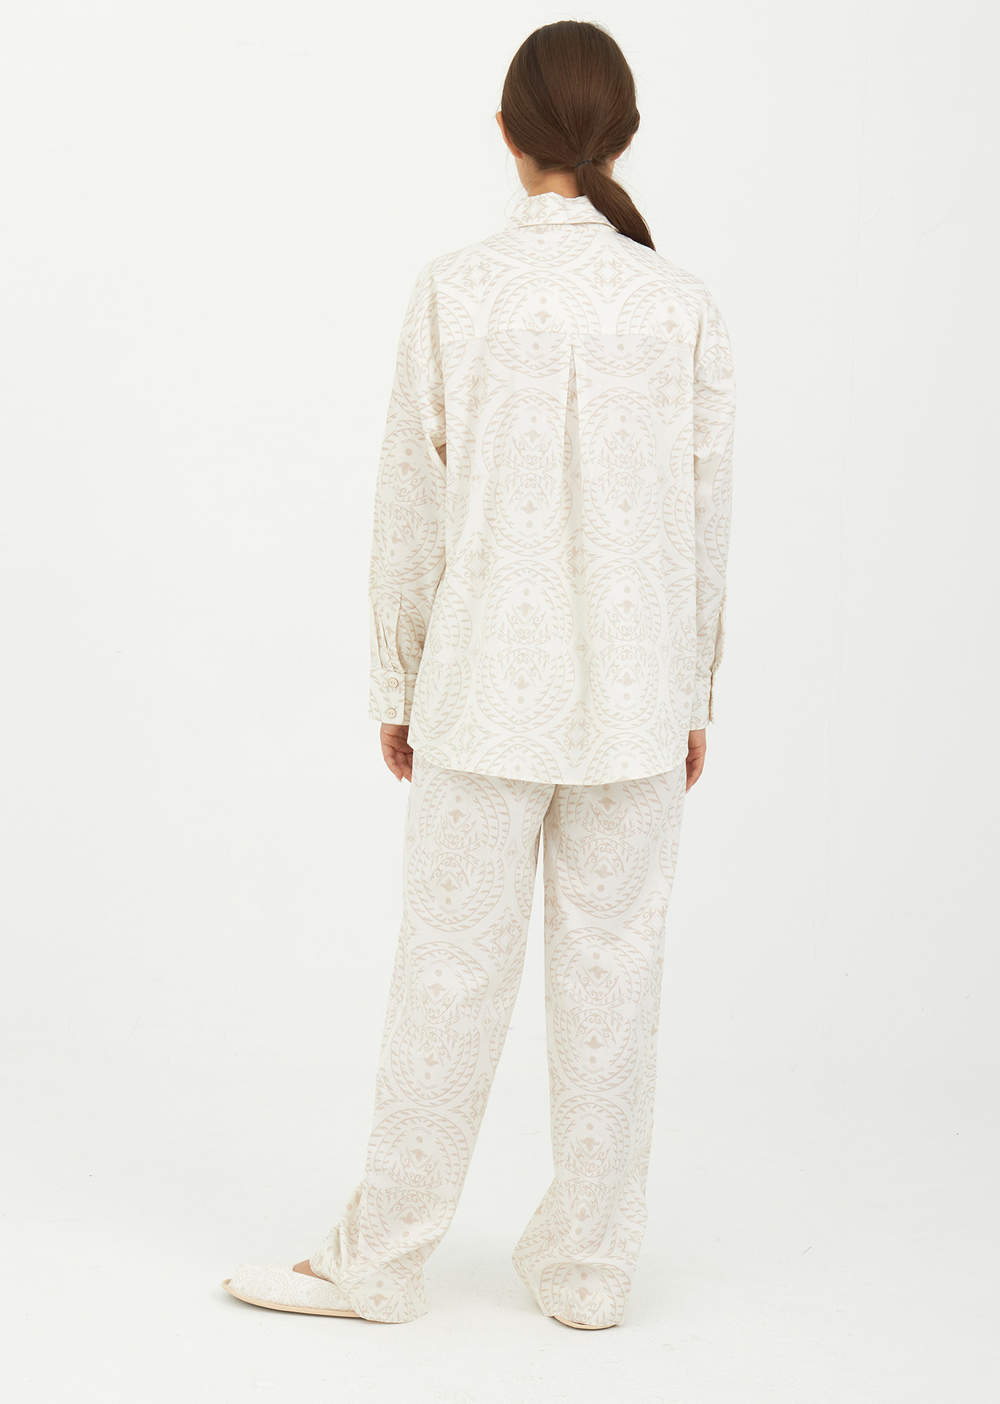 Пижама (брюки-рубашка) принт 232-01, р XL